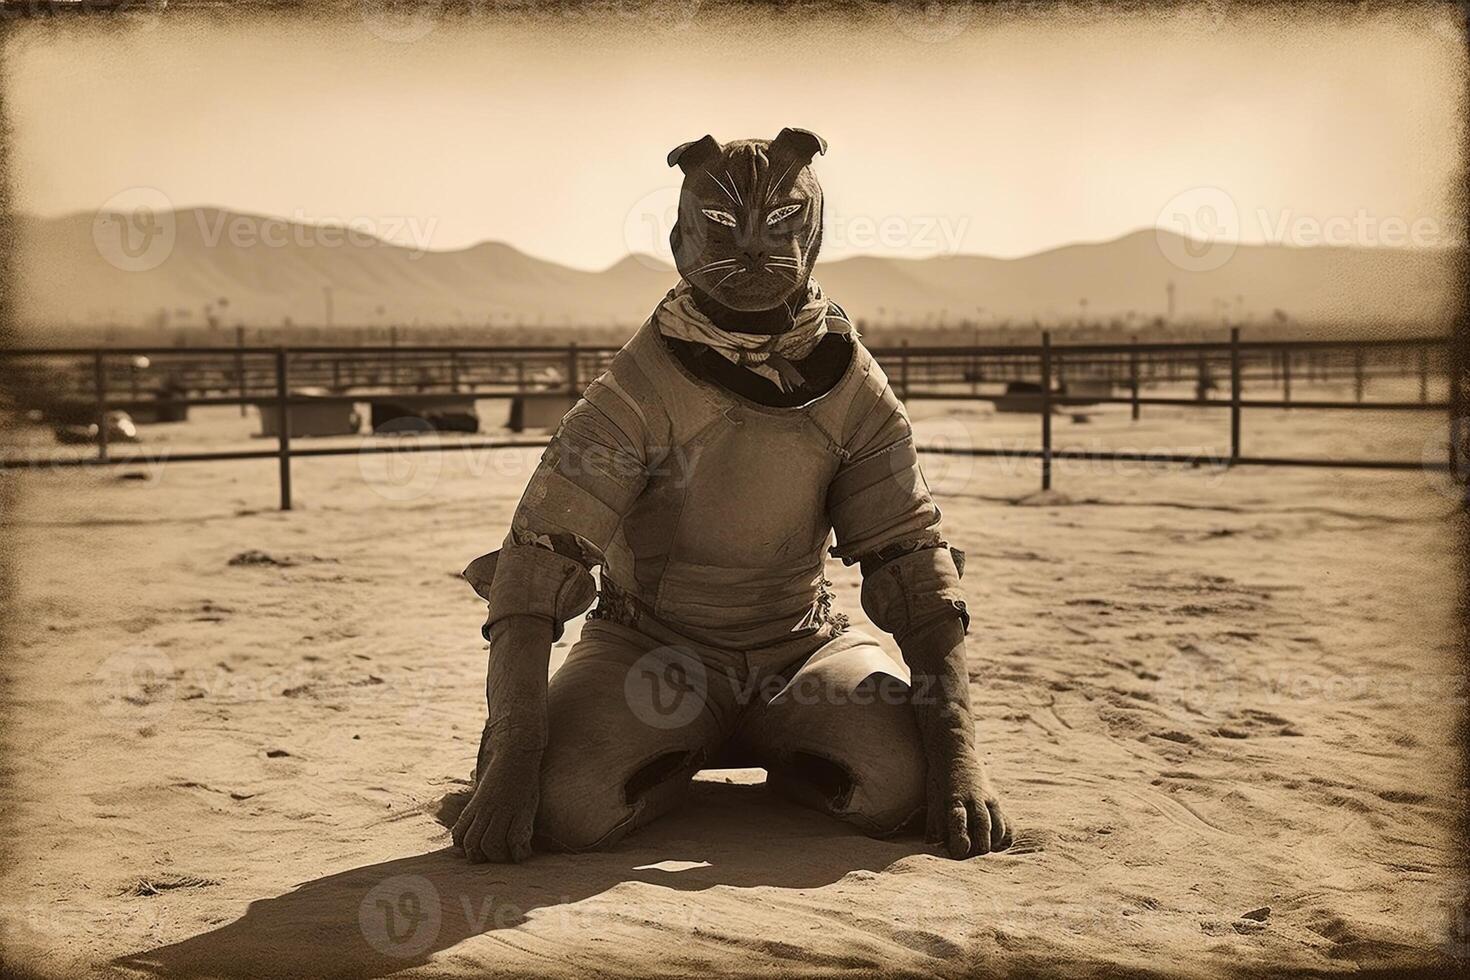 Cat wrestler wearing a wrestling costume 1920s style illustration photo